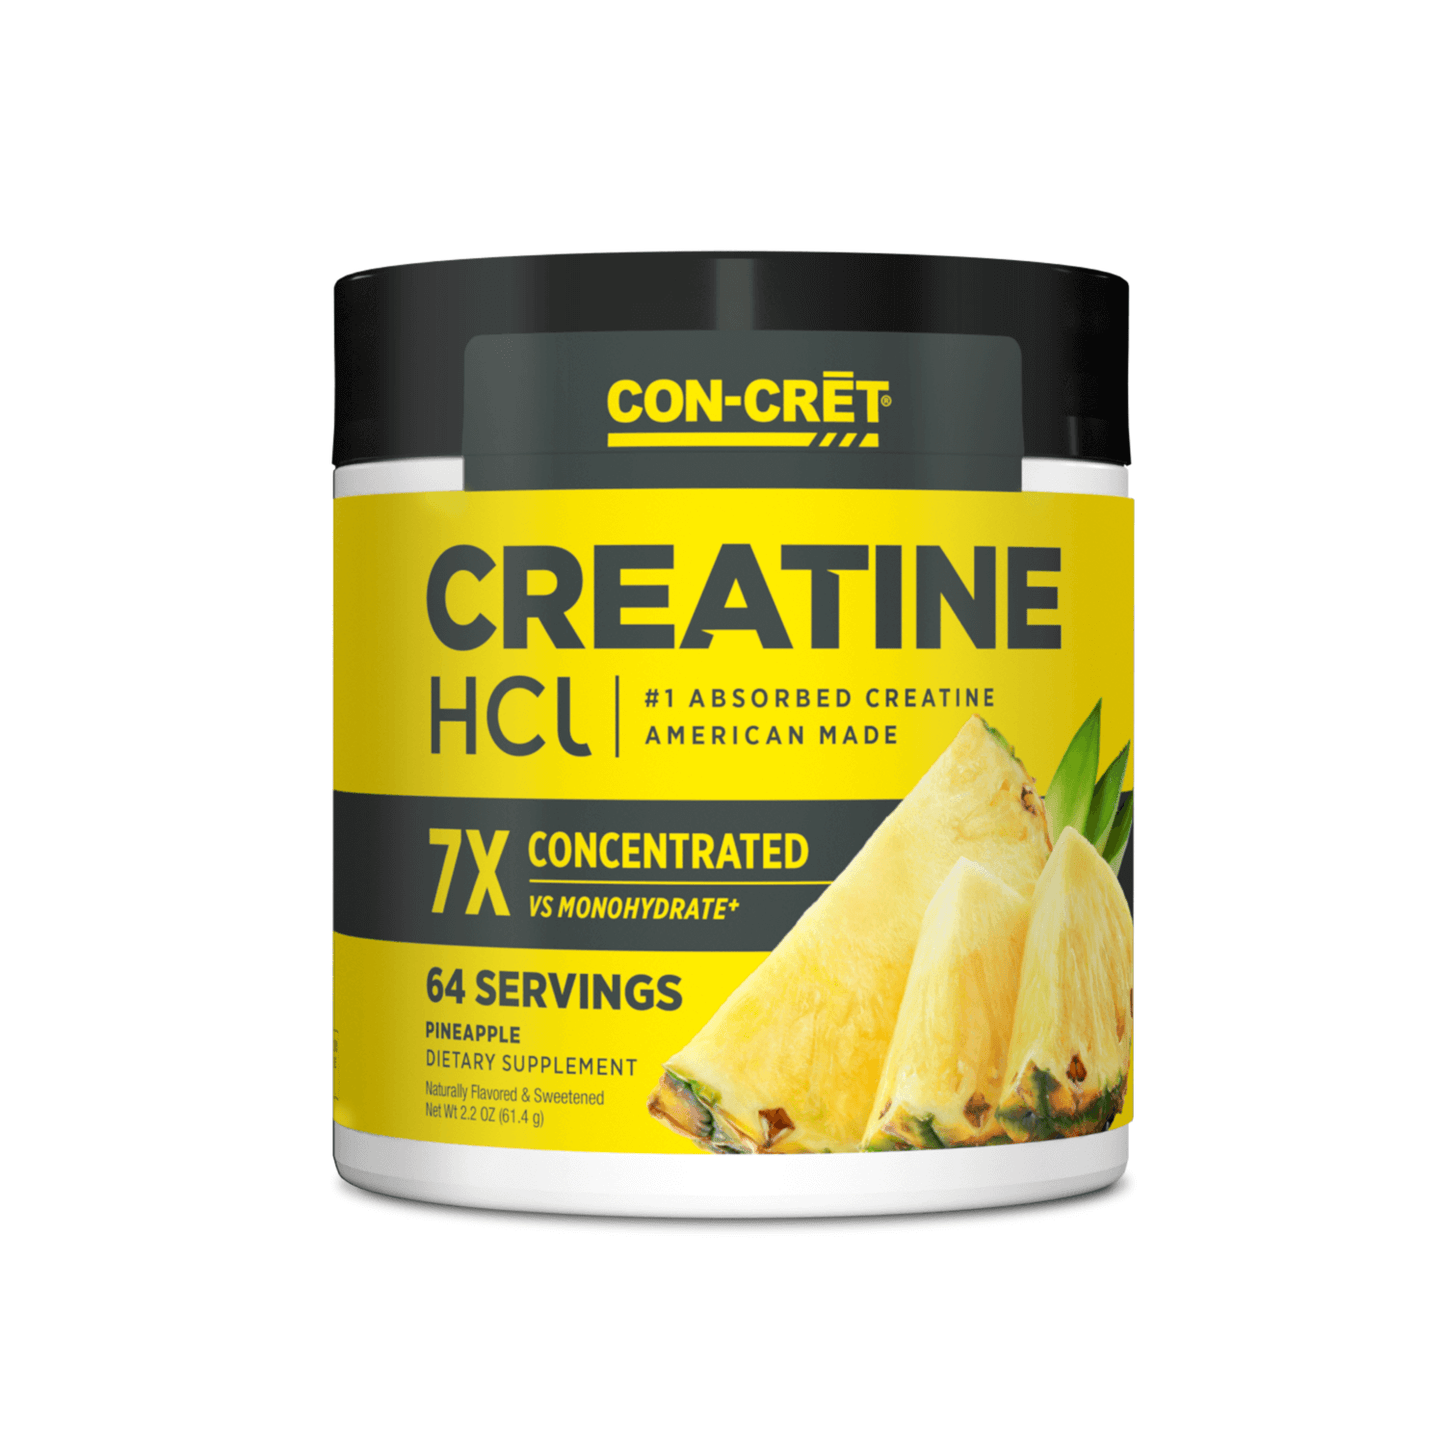 
                  
                    Flavored Creatine - CON-CRĒT® HCl Powder - CON-CRET Patented Creatine HCl
                  
                